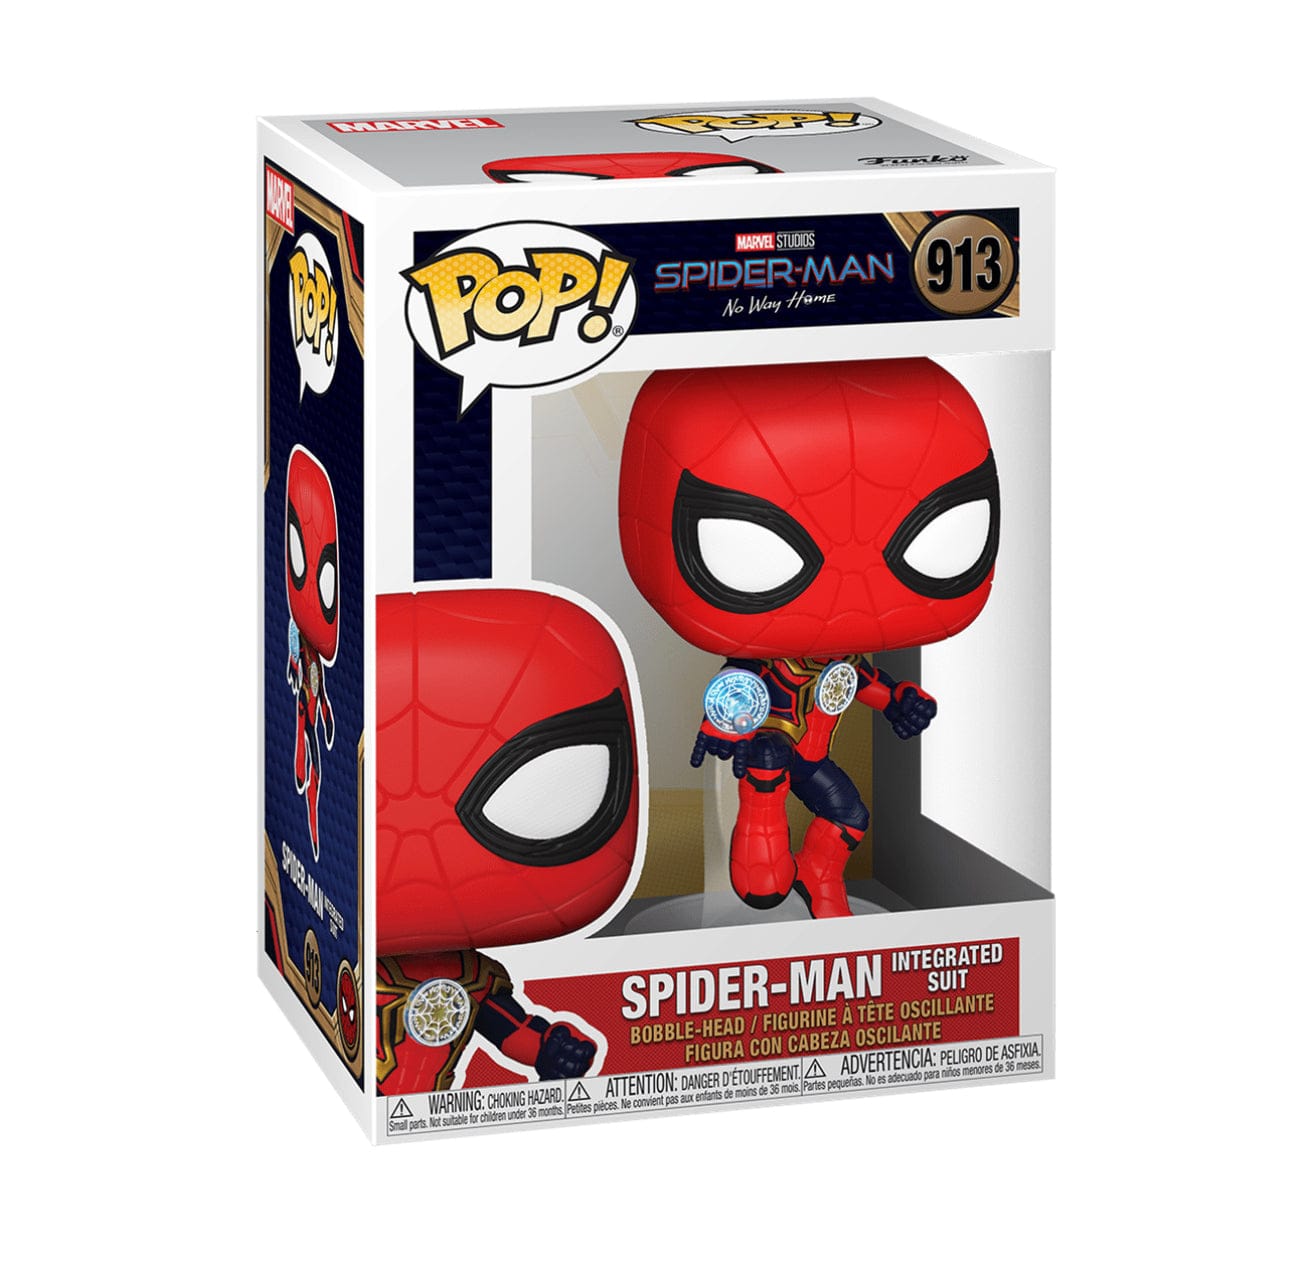 Spider-Man: No Way Home Spider-Man Integrated Suit Pop! Vinyl Figure Media 2 of 2 Window Display Box 